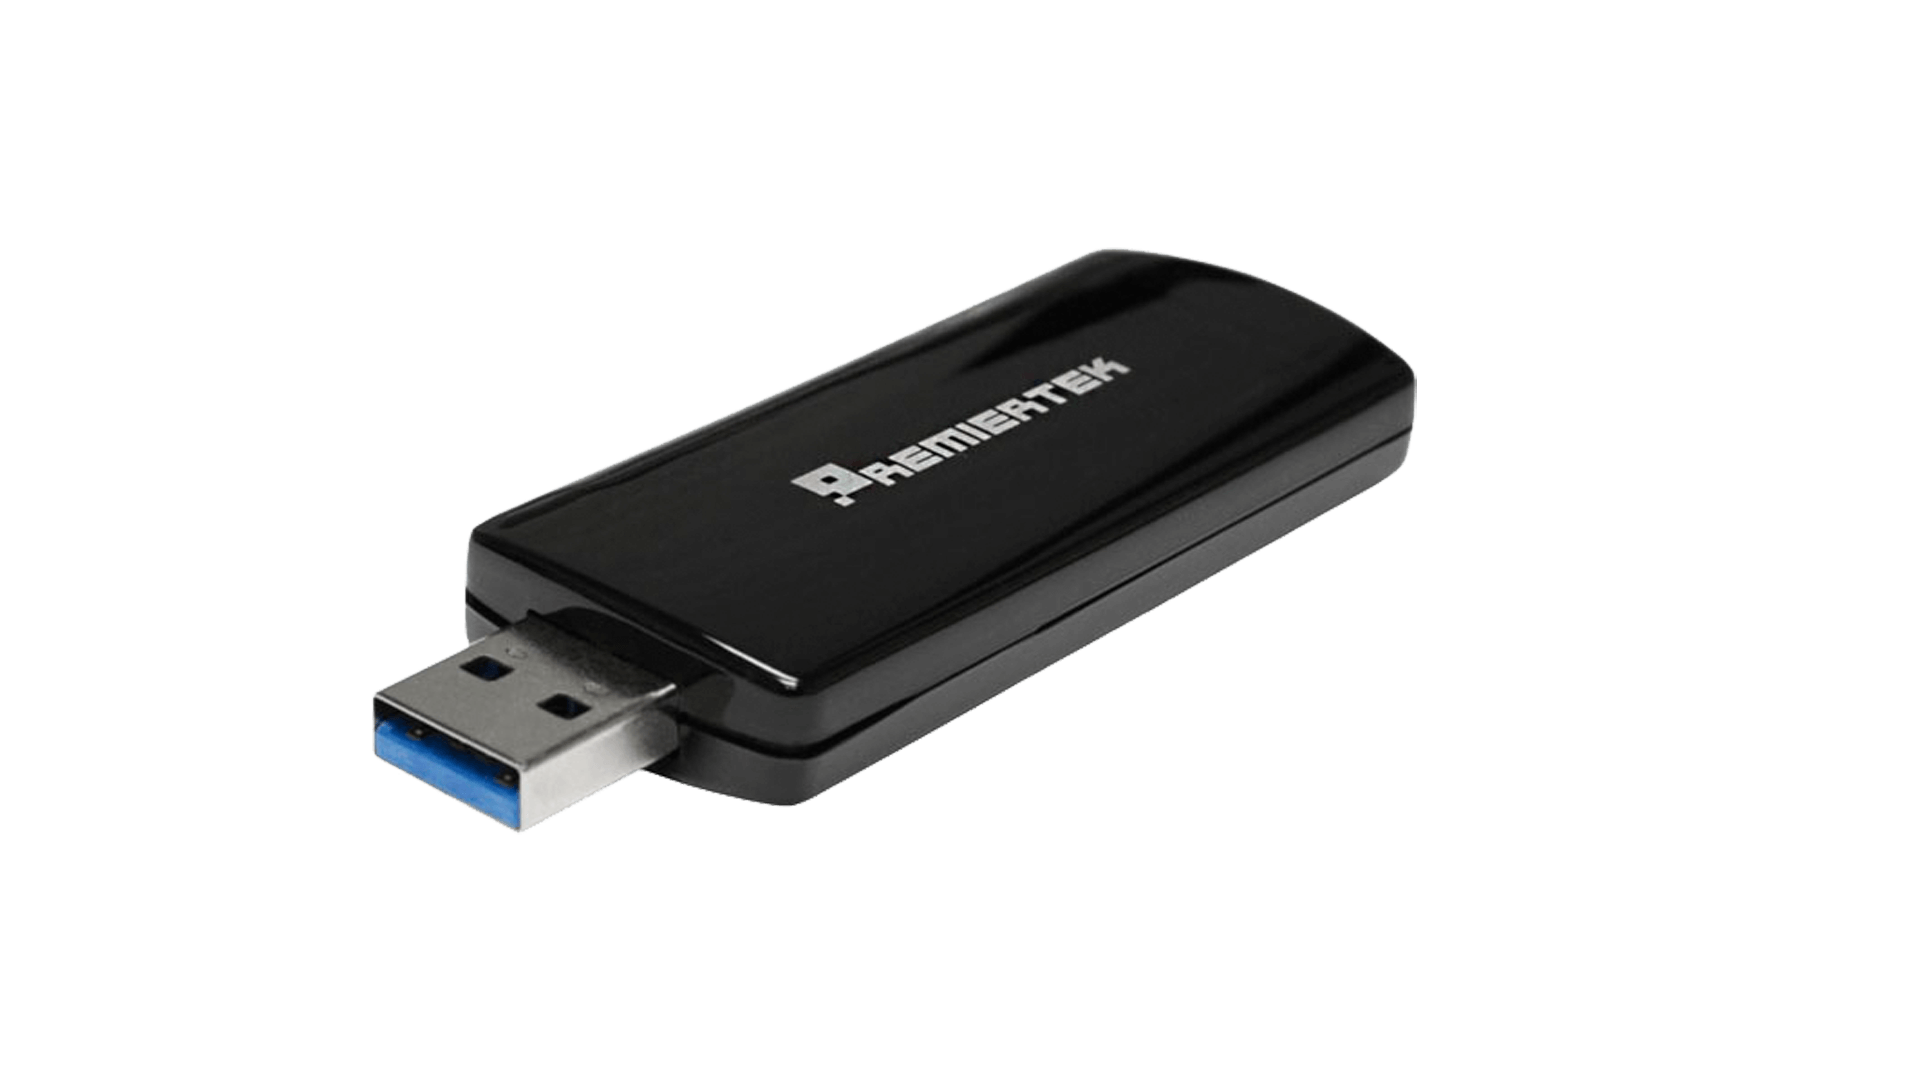 Realtek 8812bu wireless. Realtek 8812au. USB Type-c модем. Драйвера на адаптер Palmexx USB WIFI N/G/B/AC С антенной, 2.4GHZ+5ghz, 802.11AC. Wi-Fi адаптер Premiertek pt-8812au.